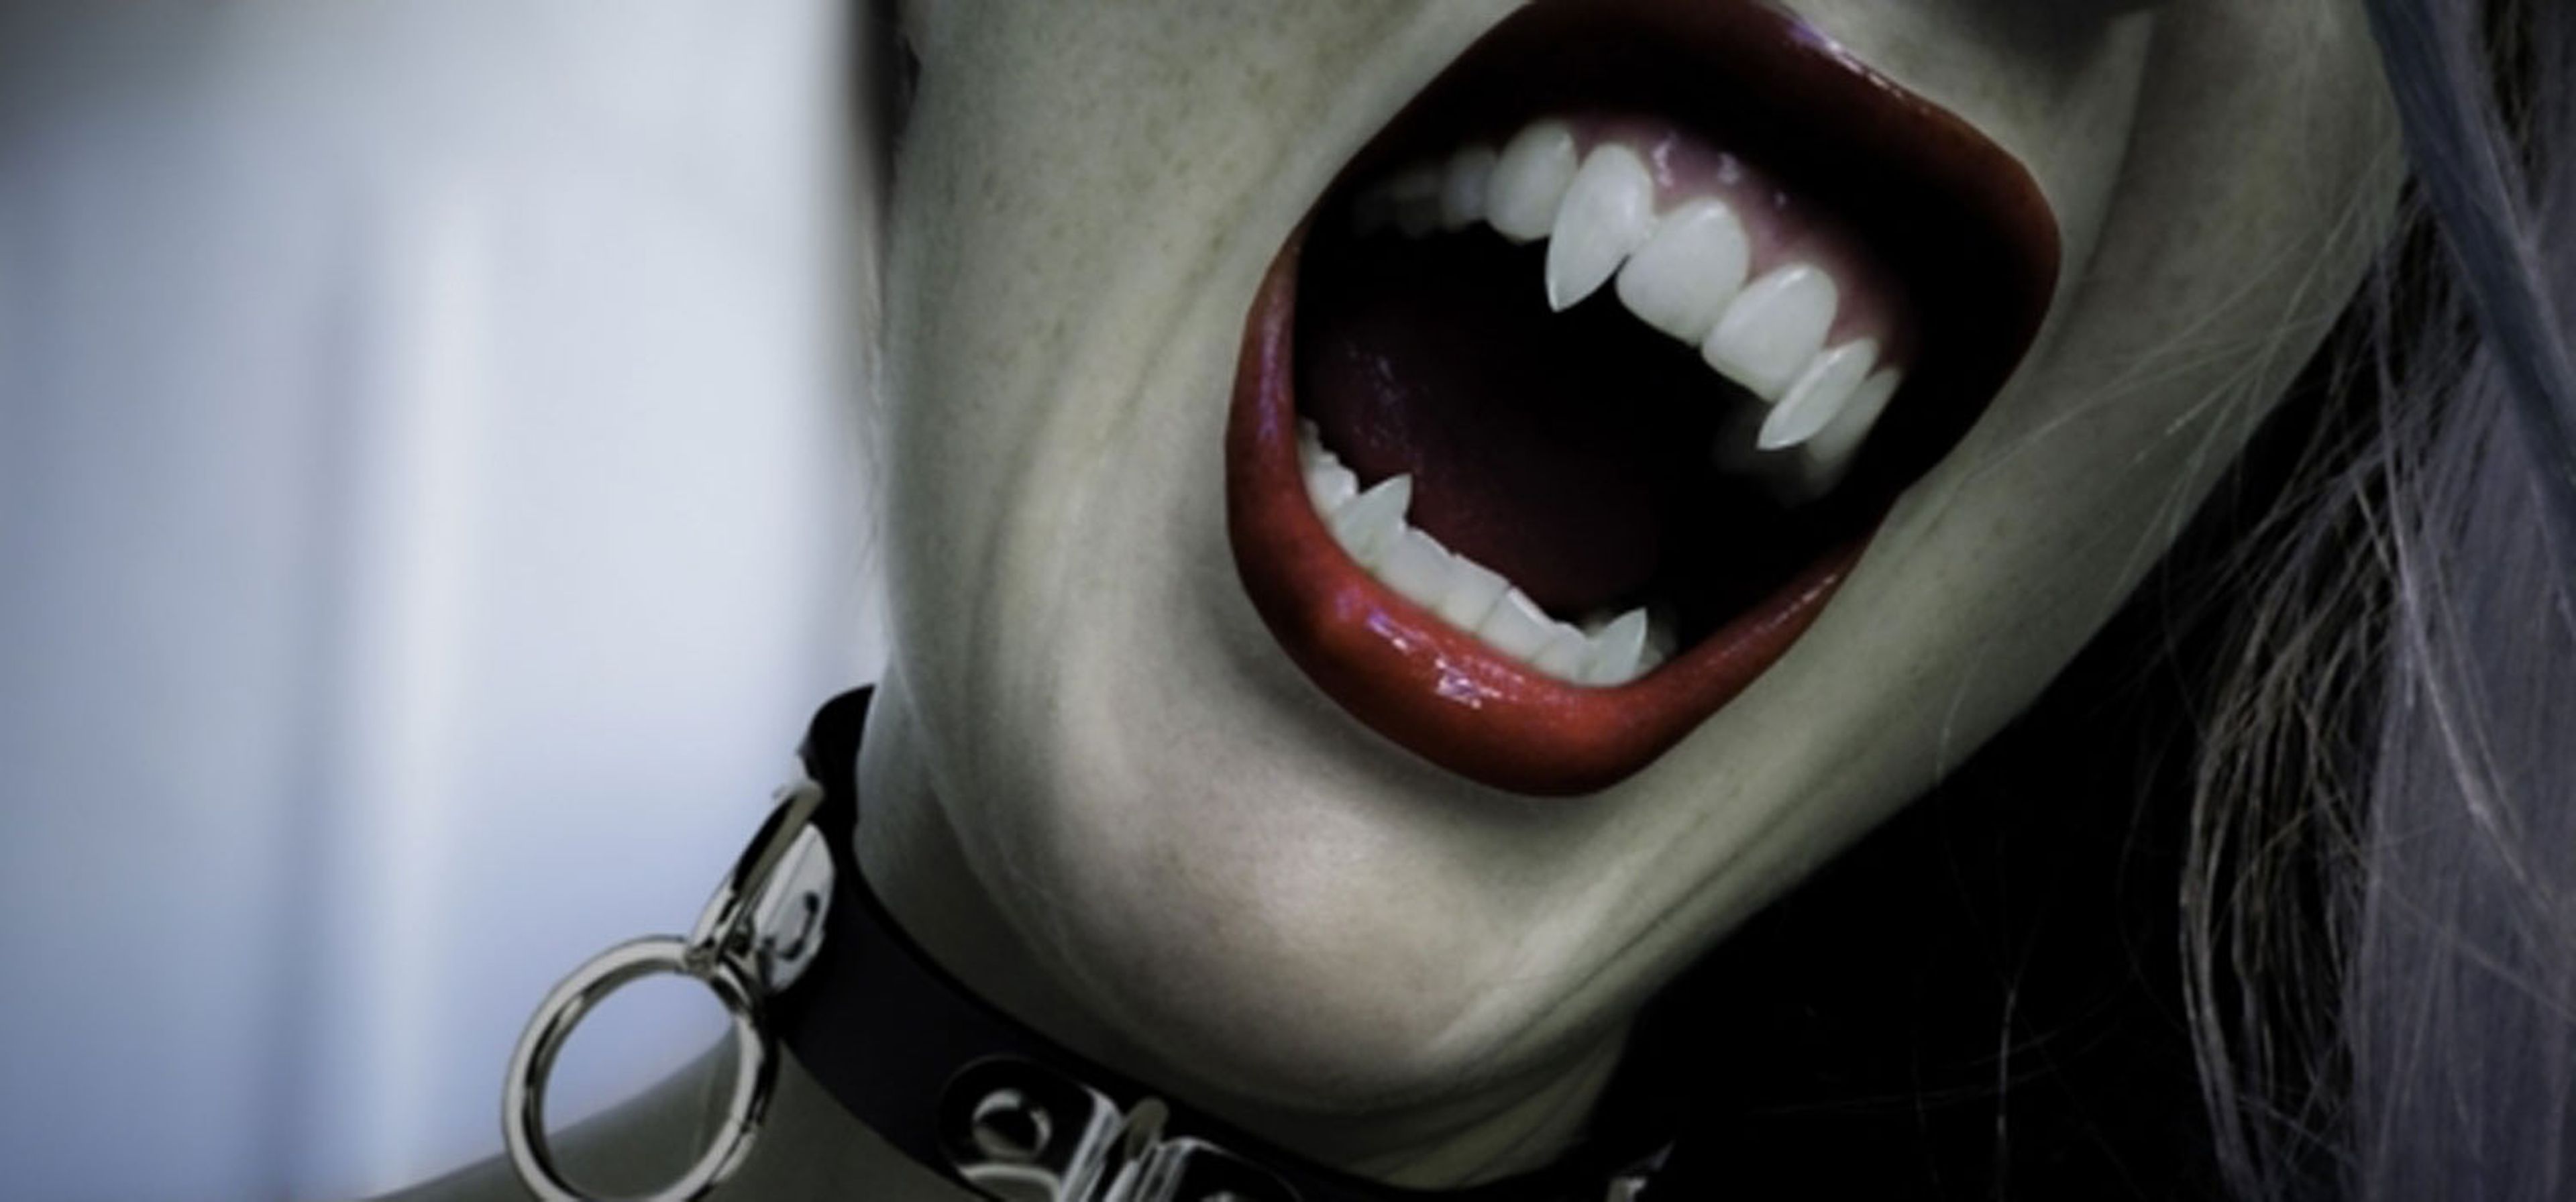 Review de World of Darkness, el documental de Vampiro: La Mascarada